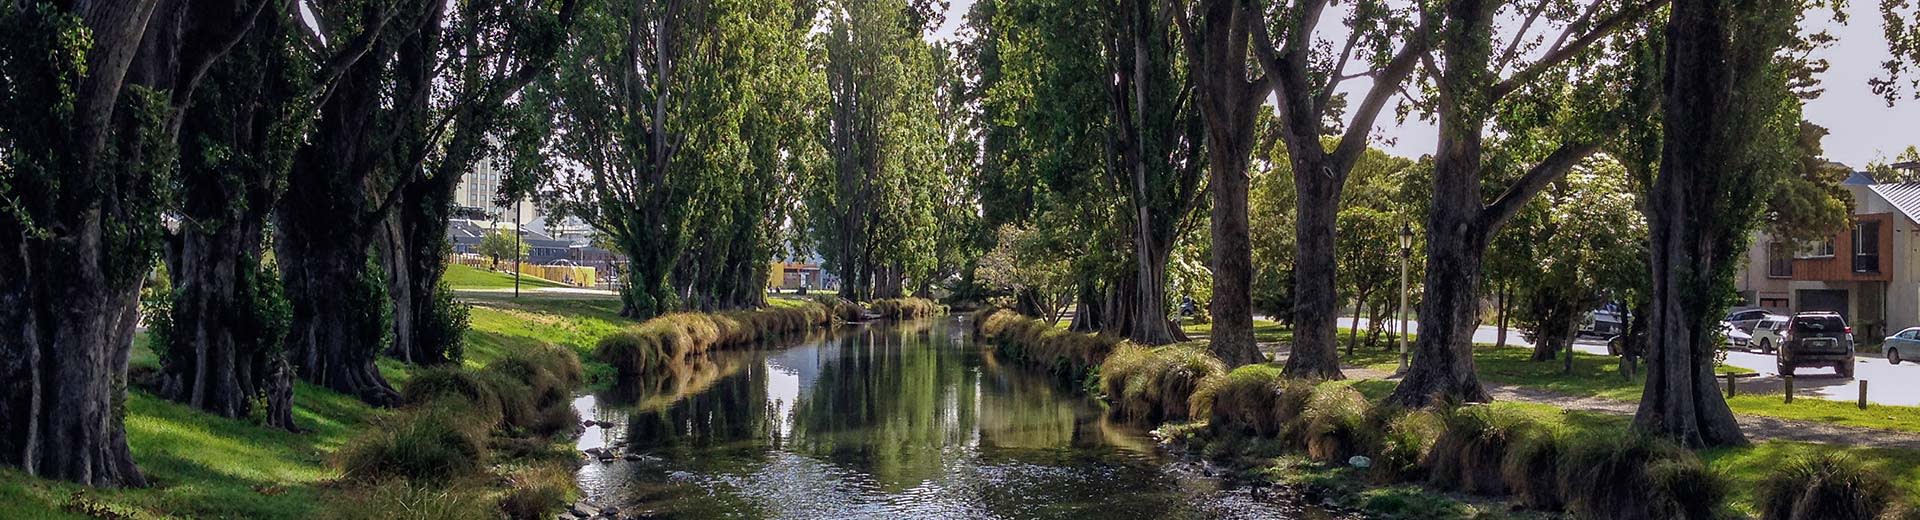 Un canal idílico rodeado de árboles en Christchurch.